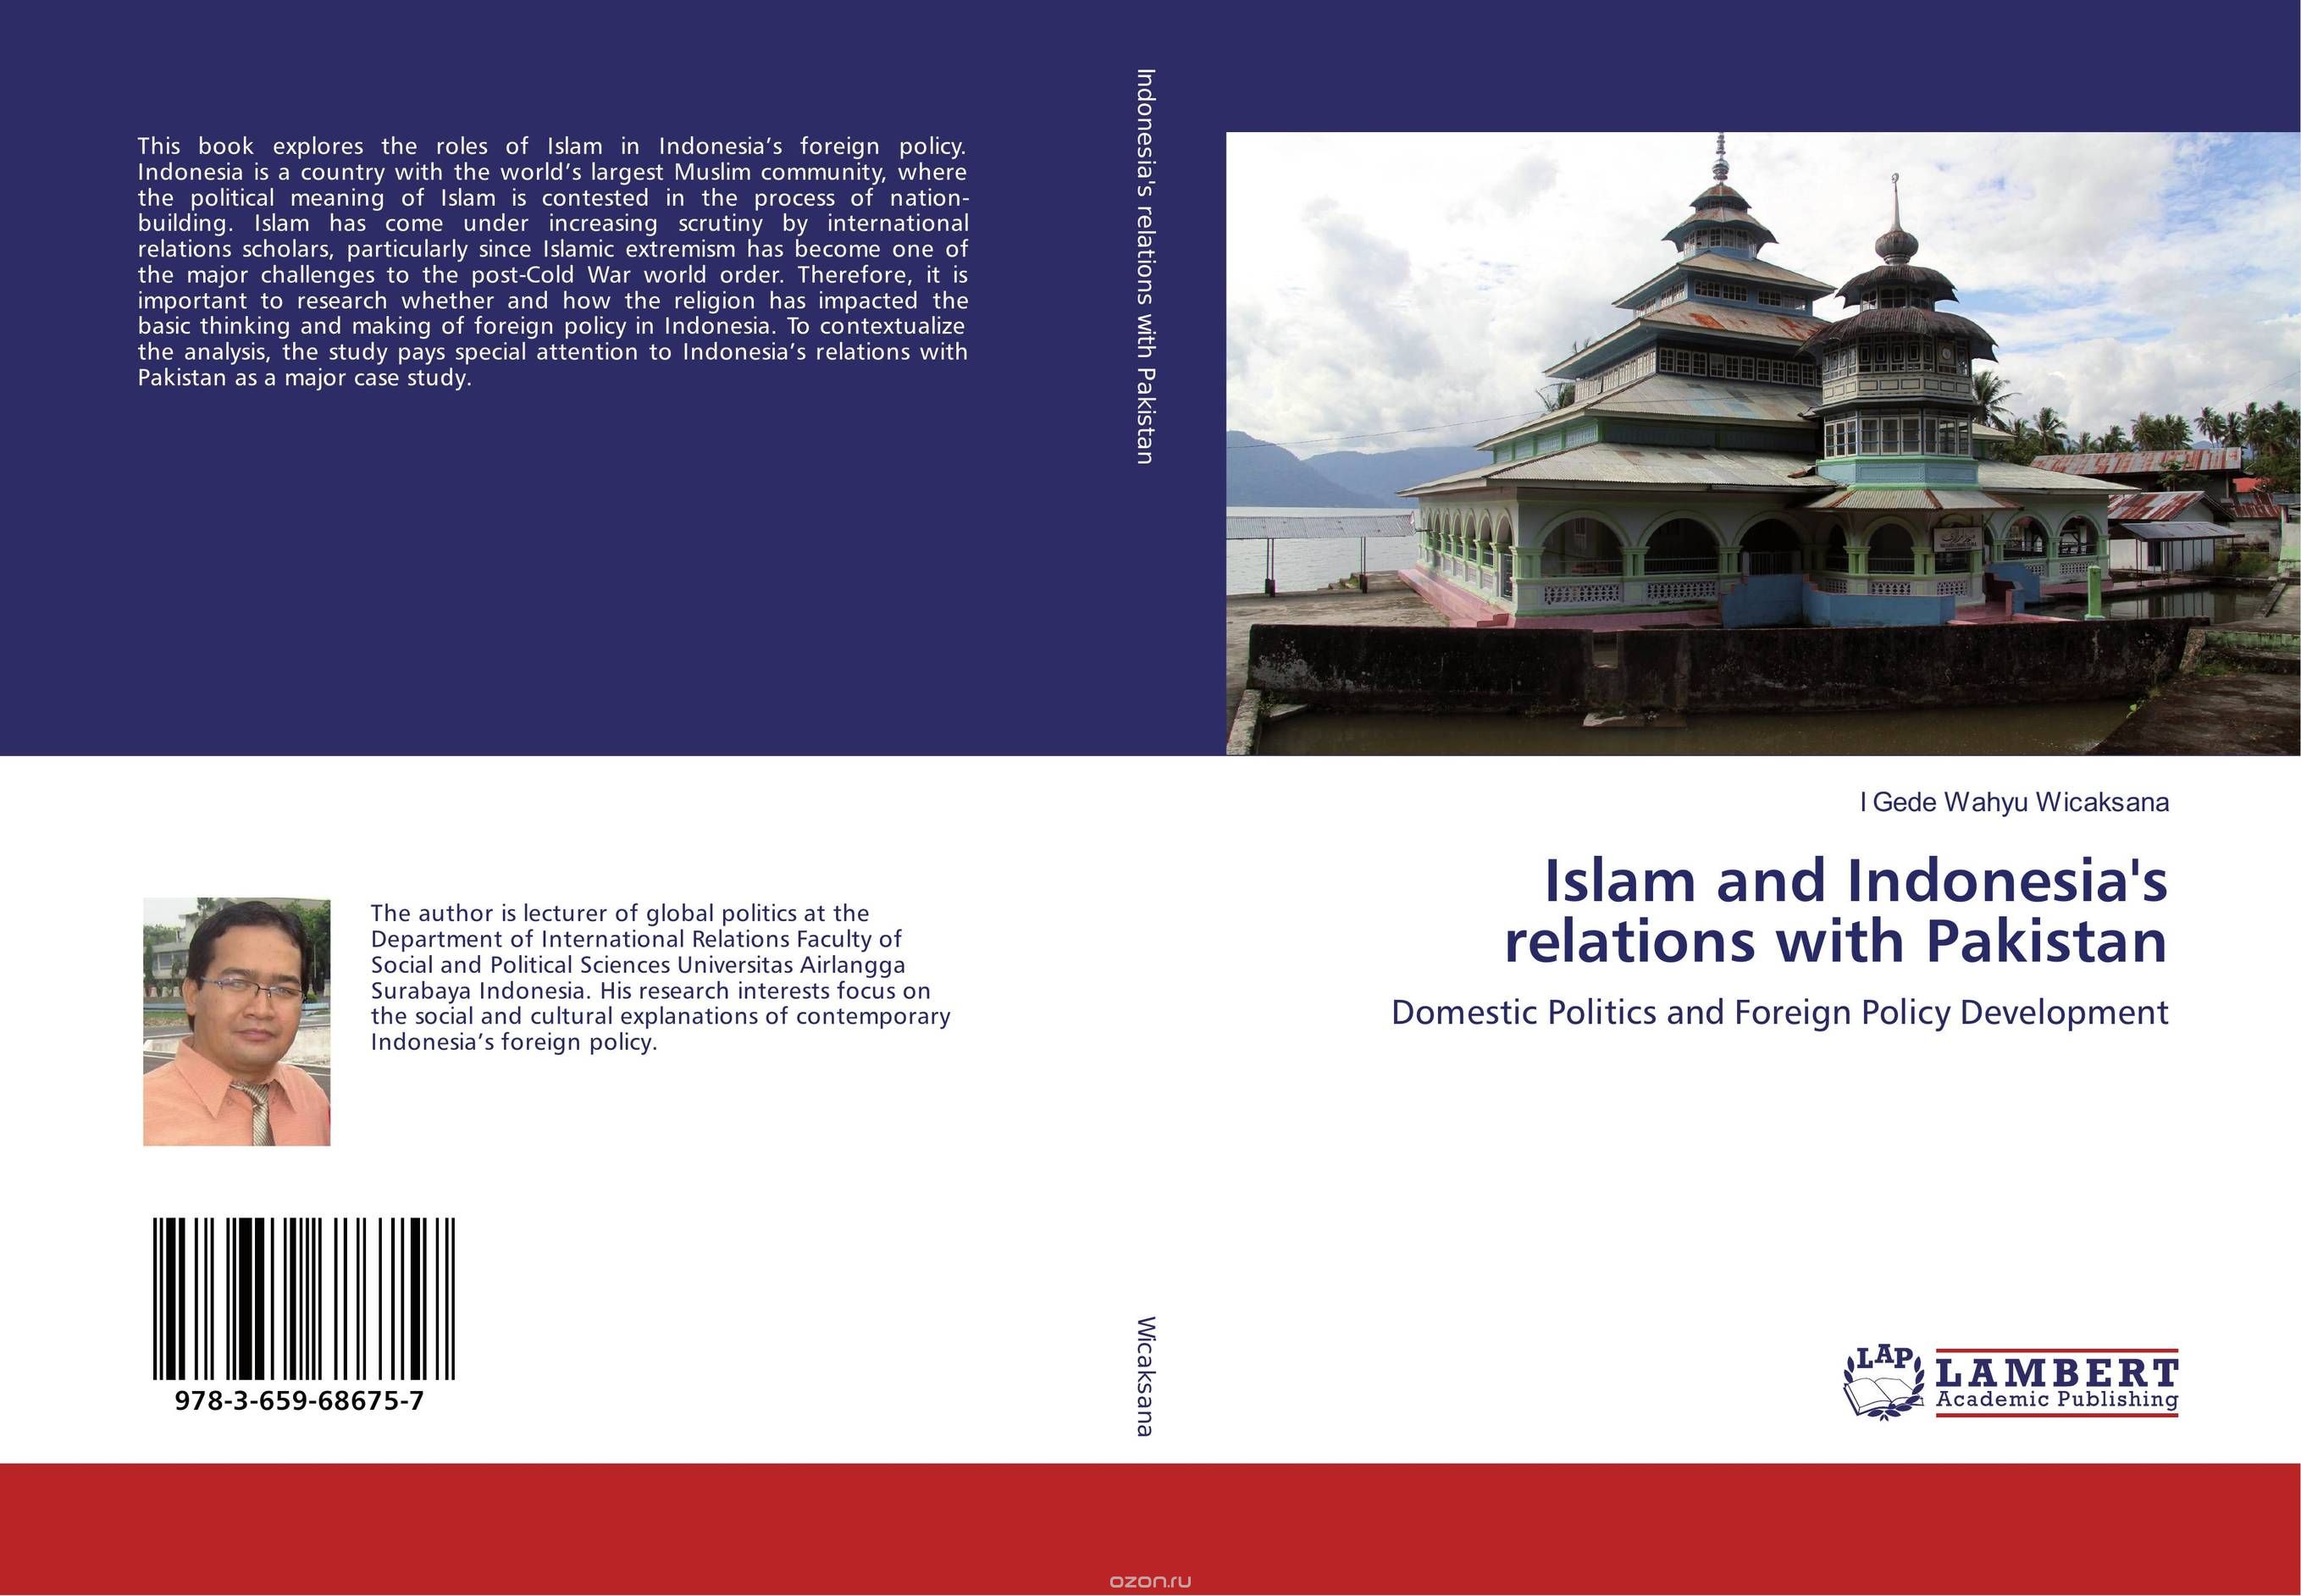 Скачать книгу "Islam and Indonesia's relations with Pakistan"